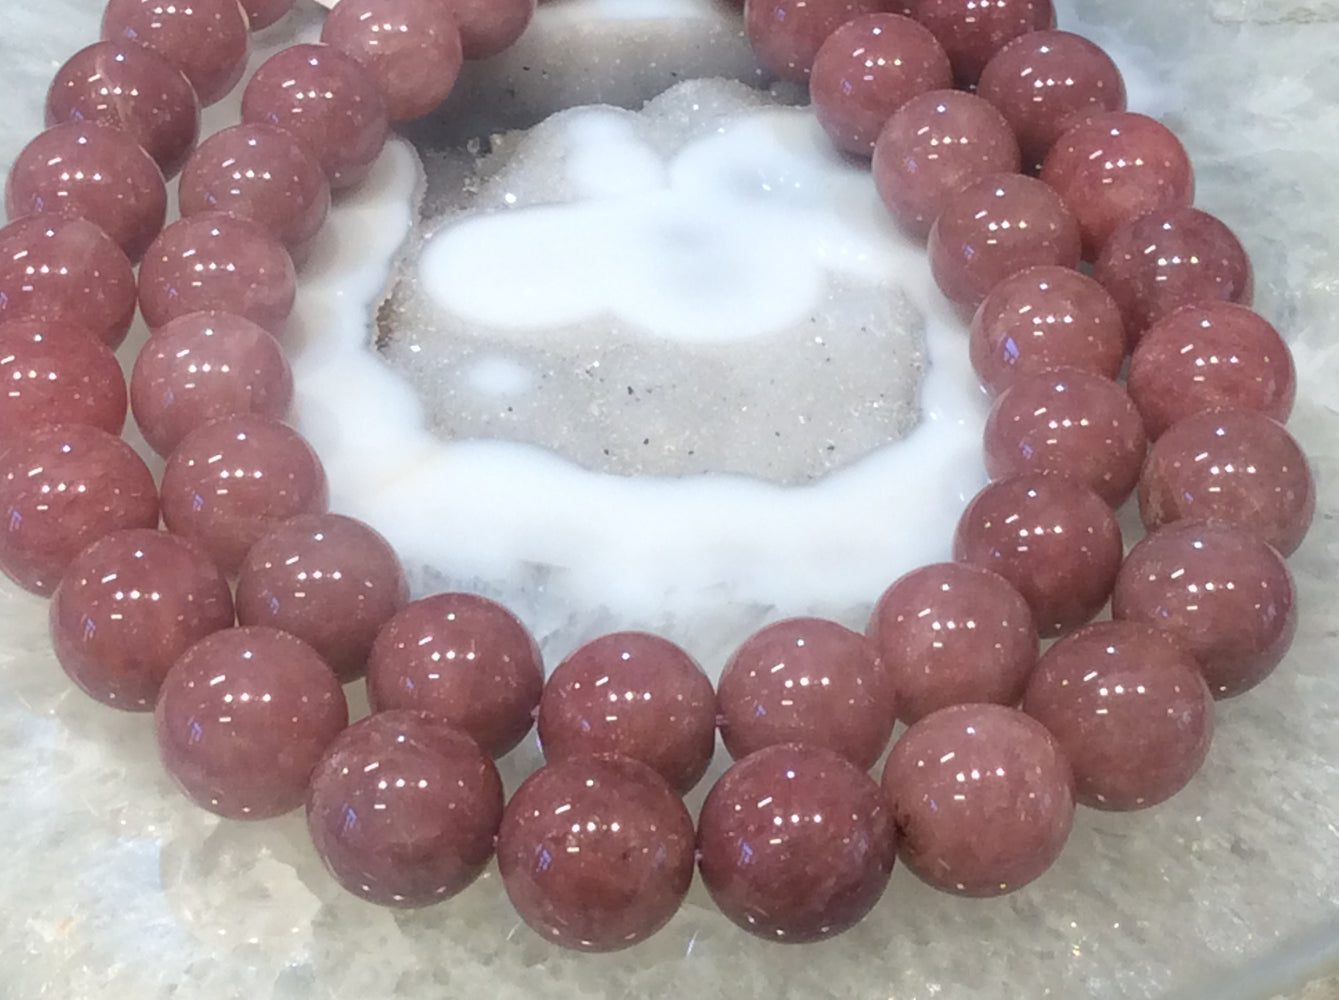 17mm dusty rose pink morango Quartz gemstone beads